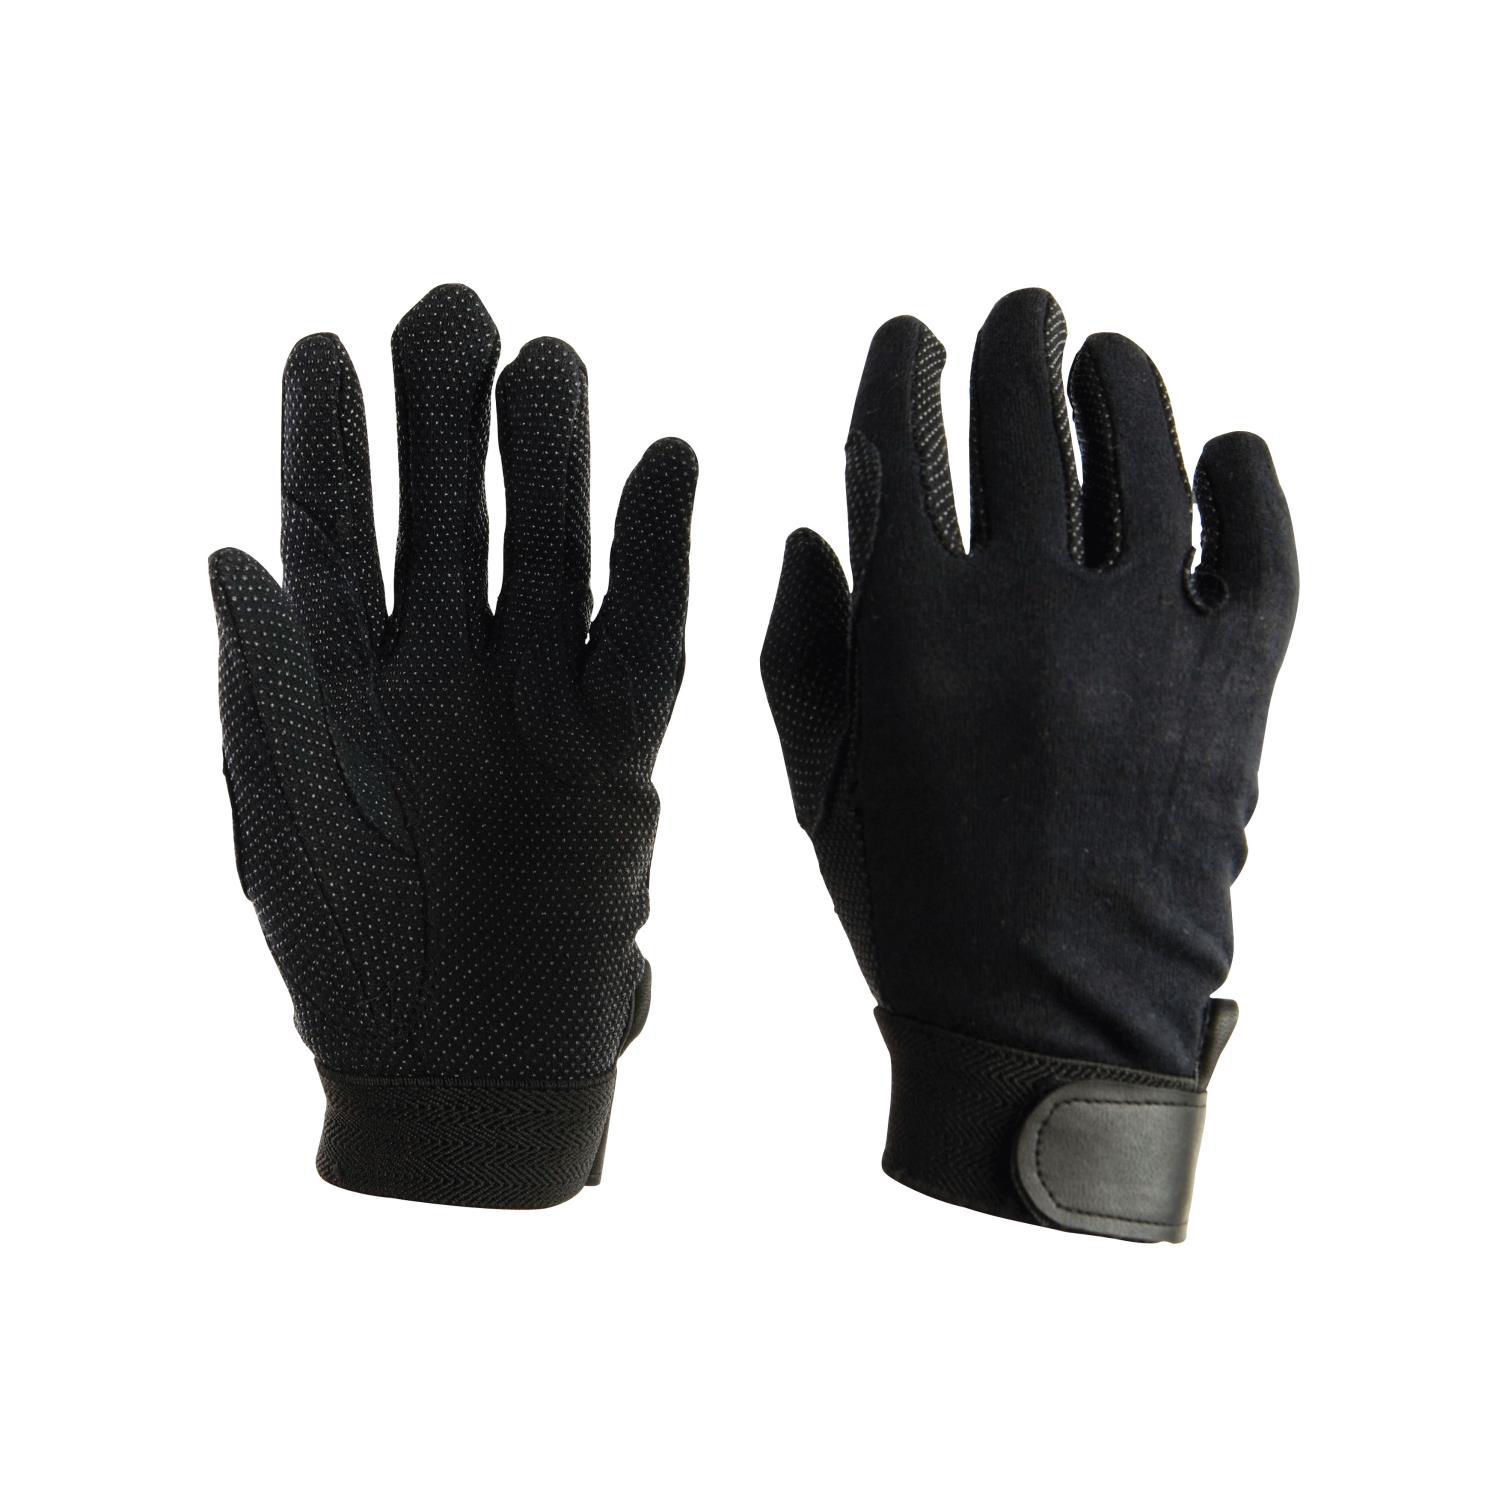 Black Dublin Childrens/Kids Track Riding Gloves One Size 